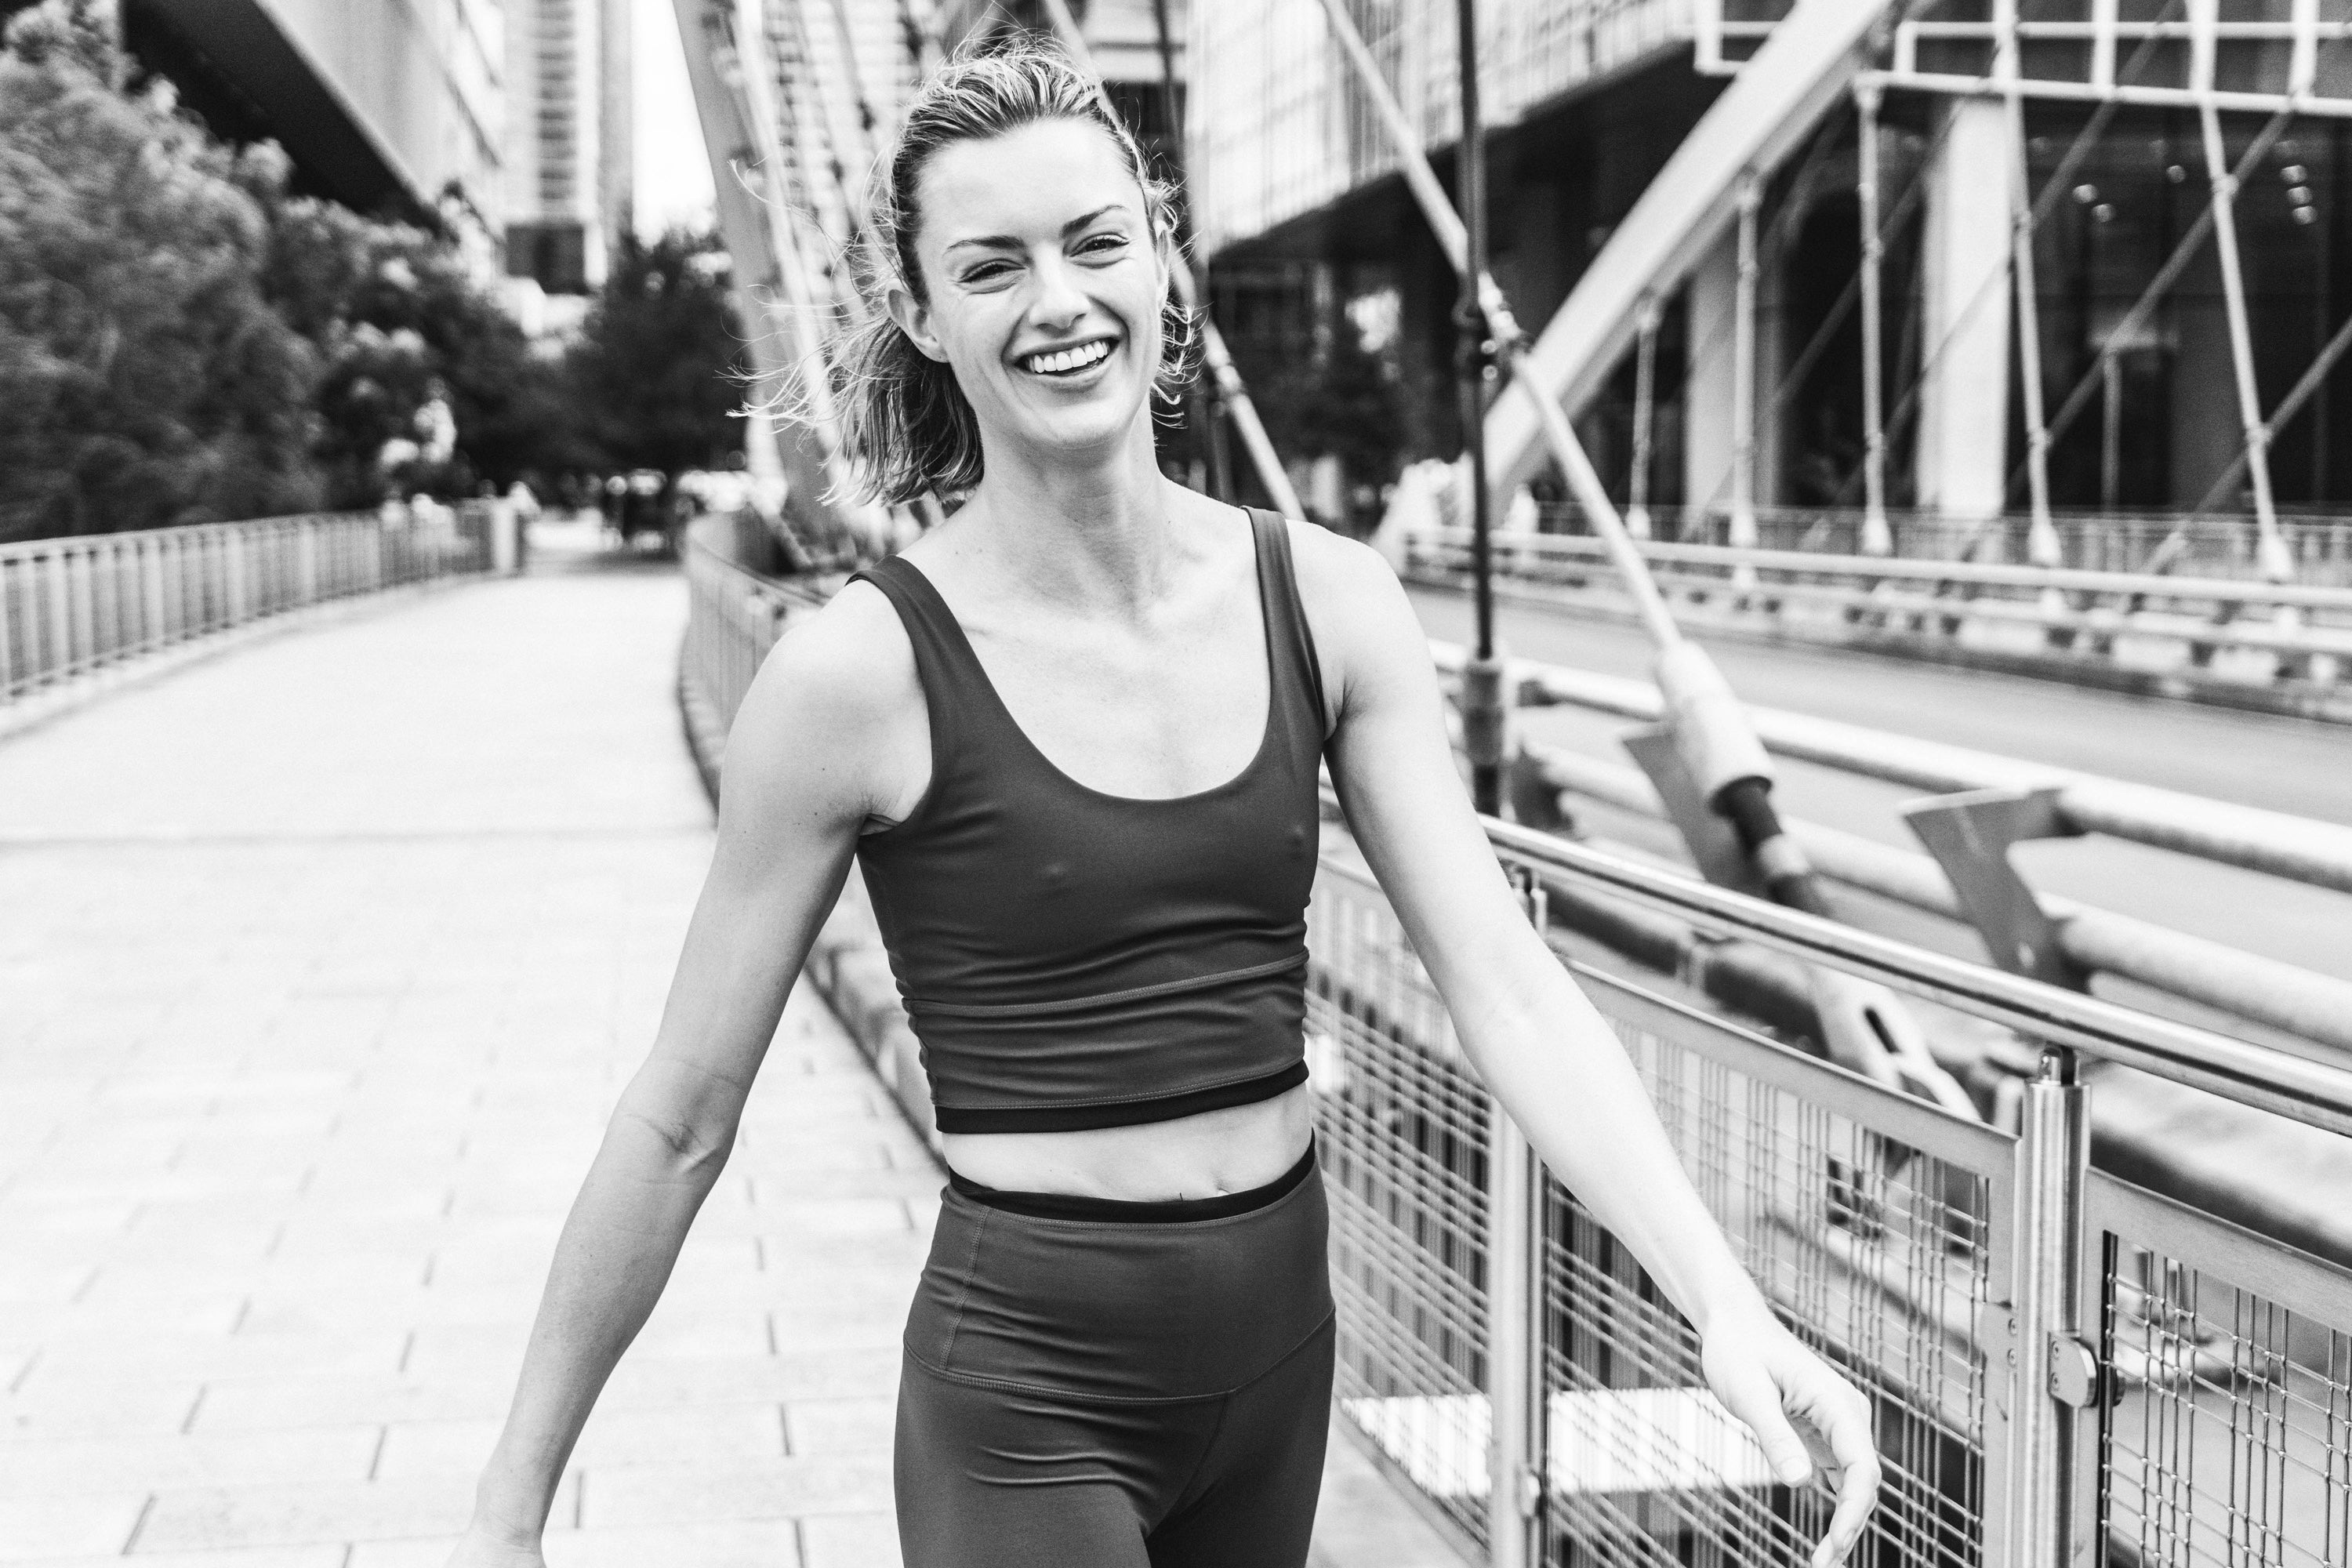 Black and white image of model smiling post run on city bridge.